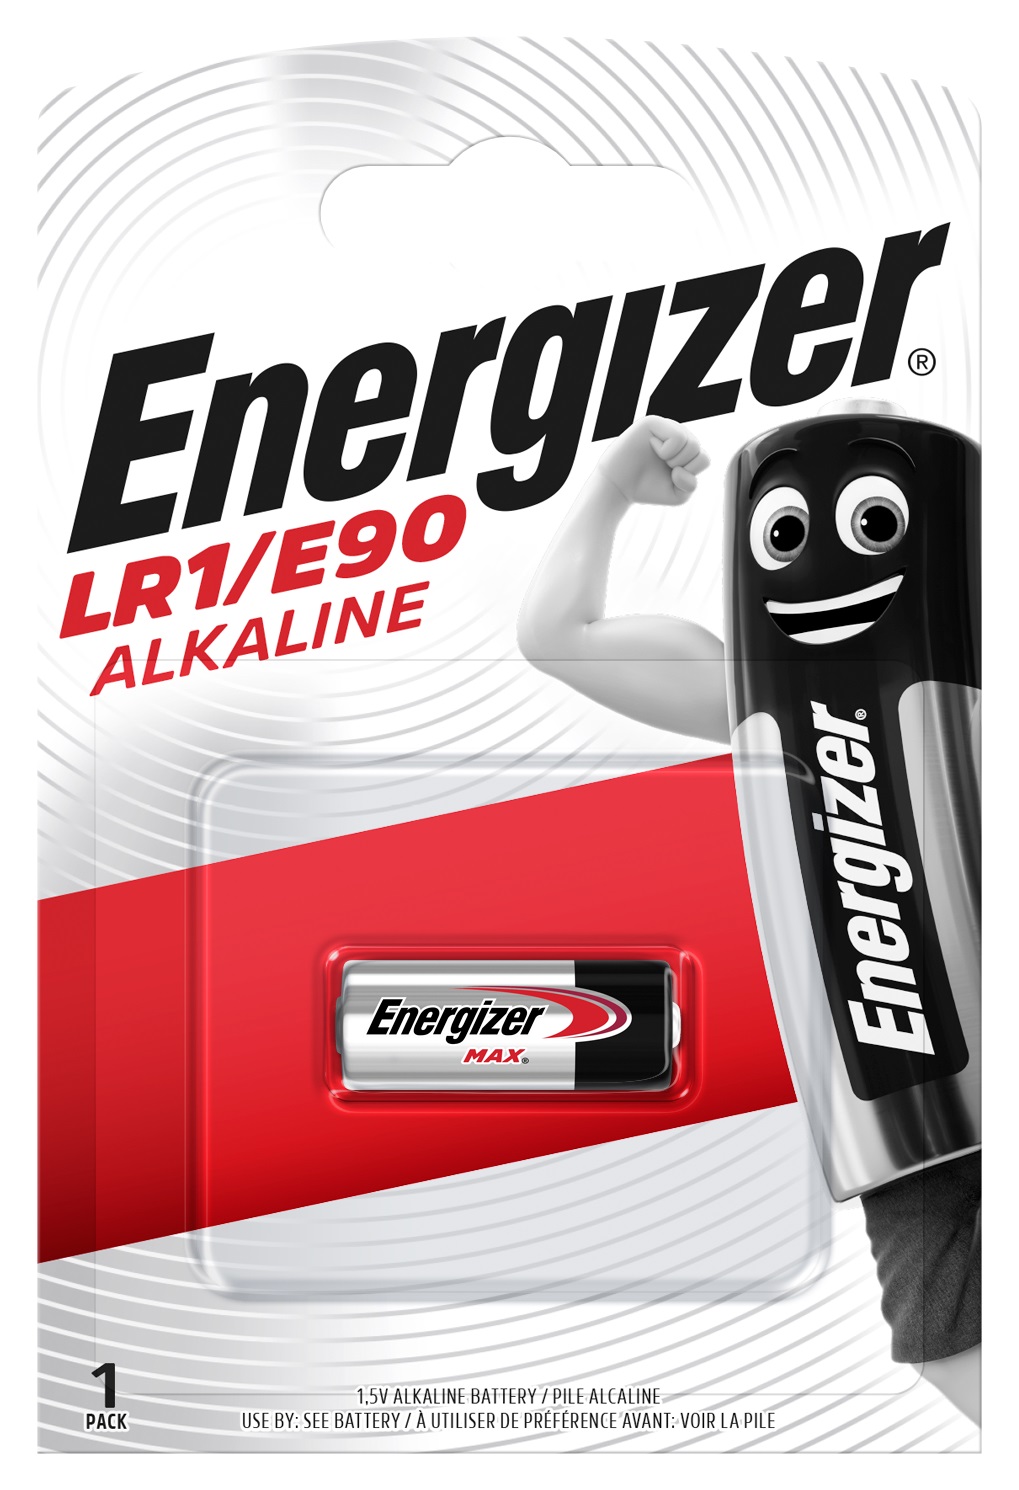 Energizer E90 Batterie